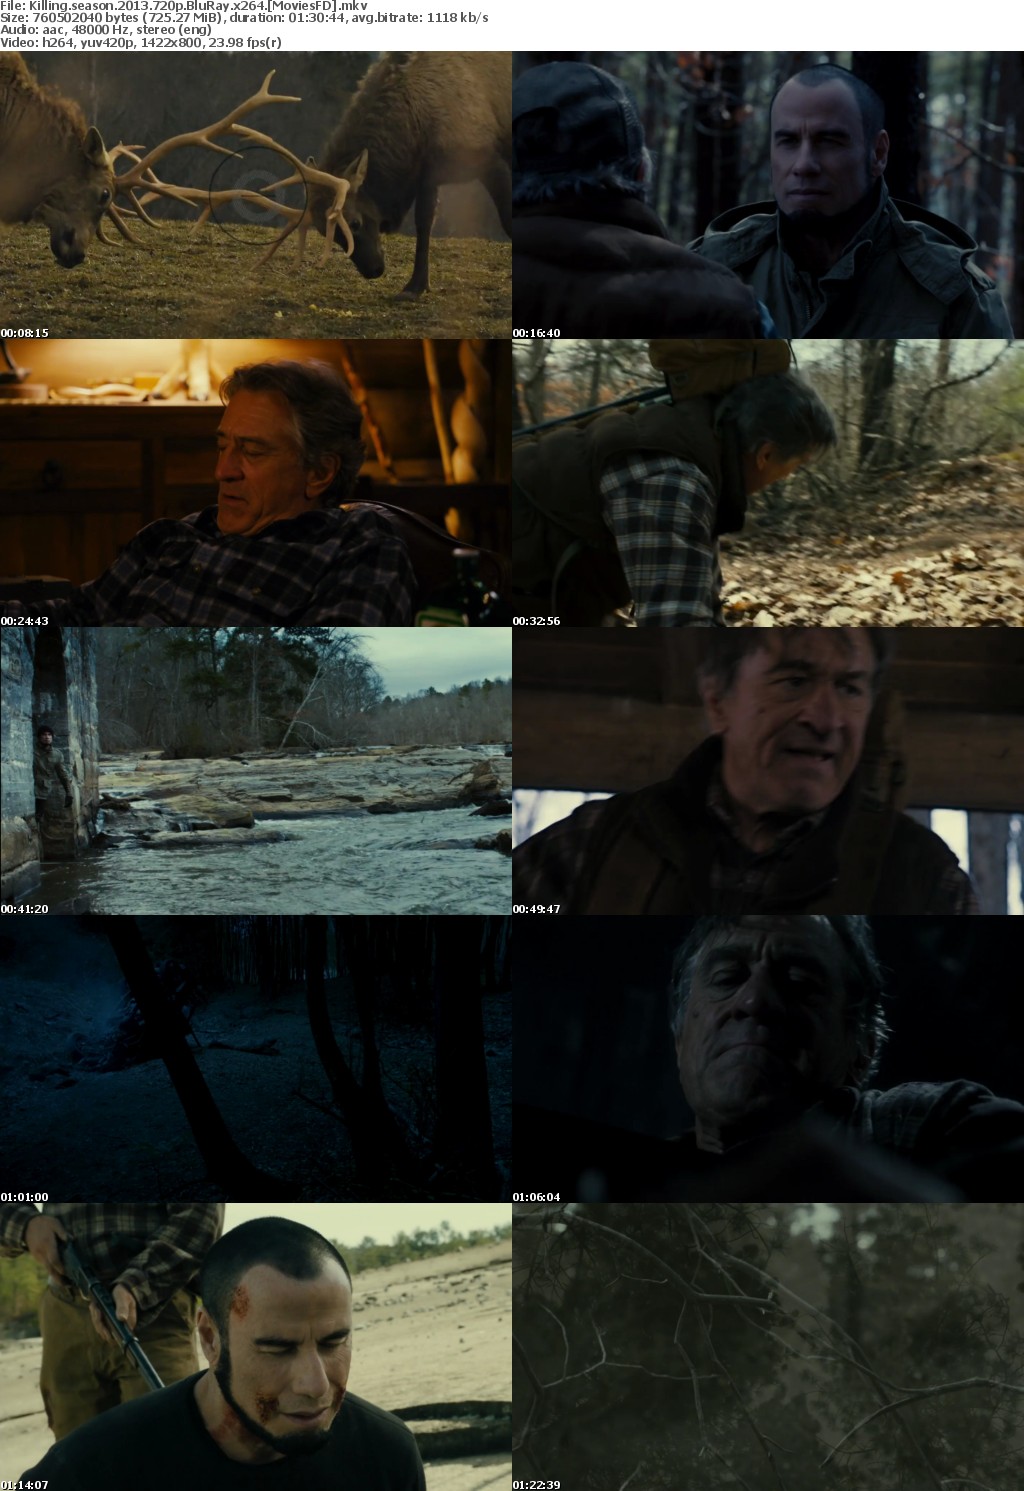 Killing Season (2013) 720p BluRay x264 - MoviesFD